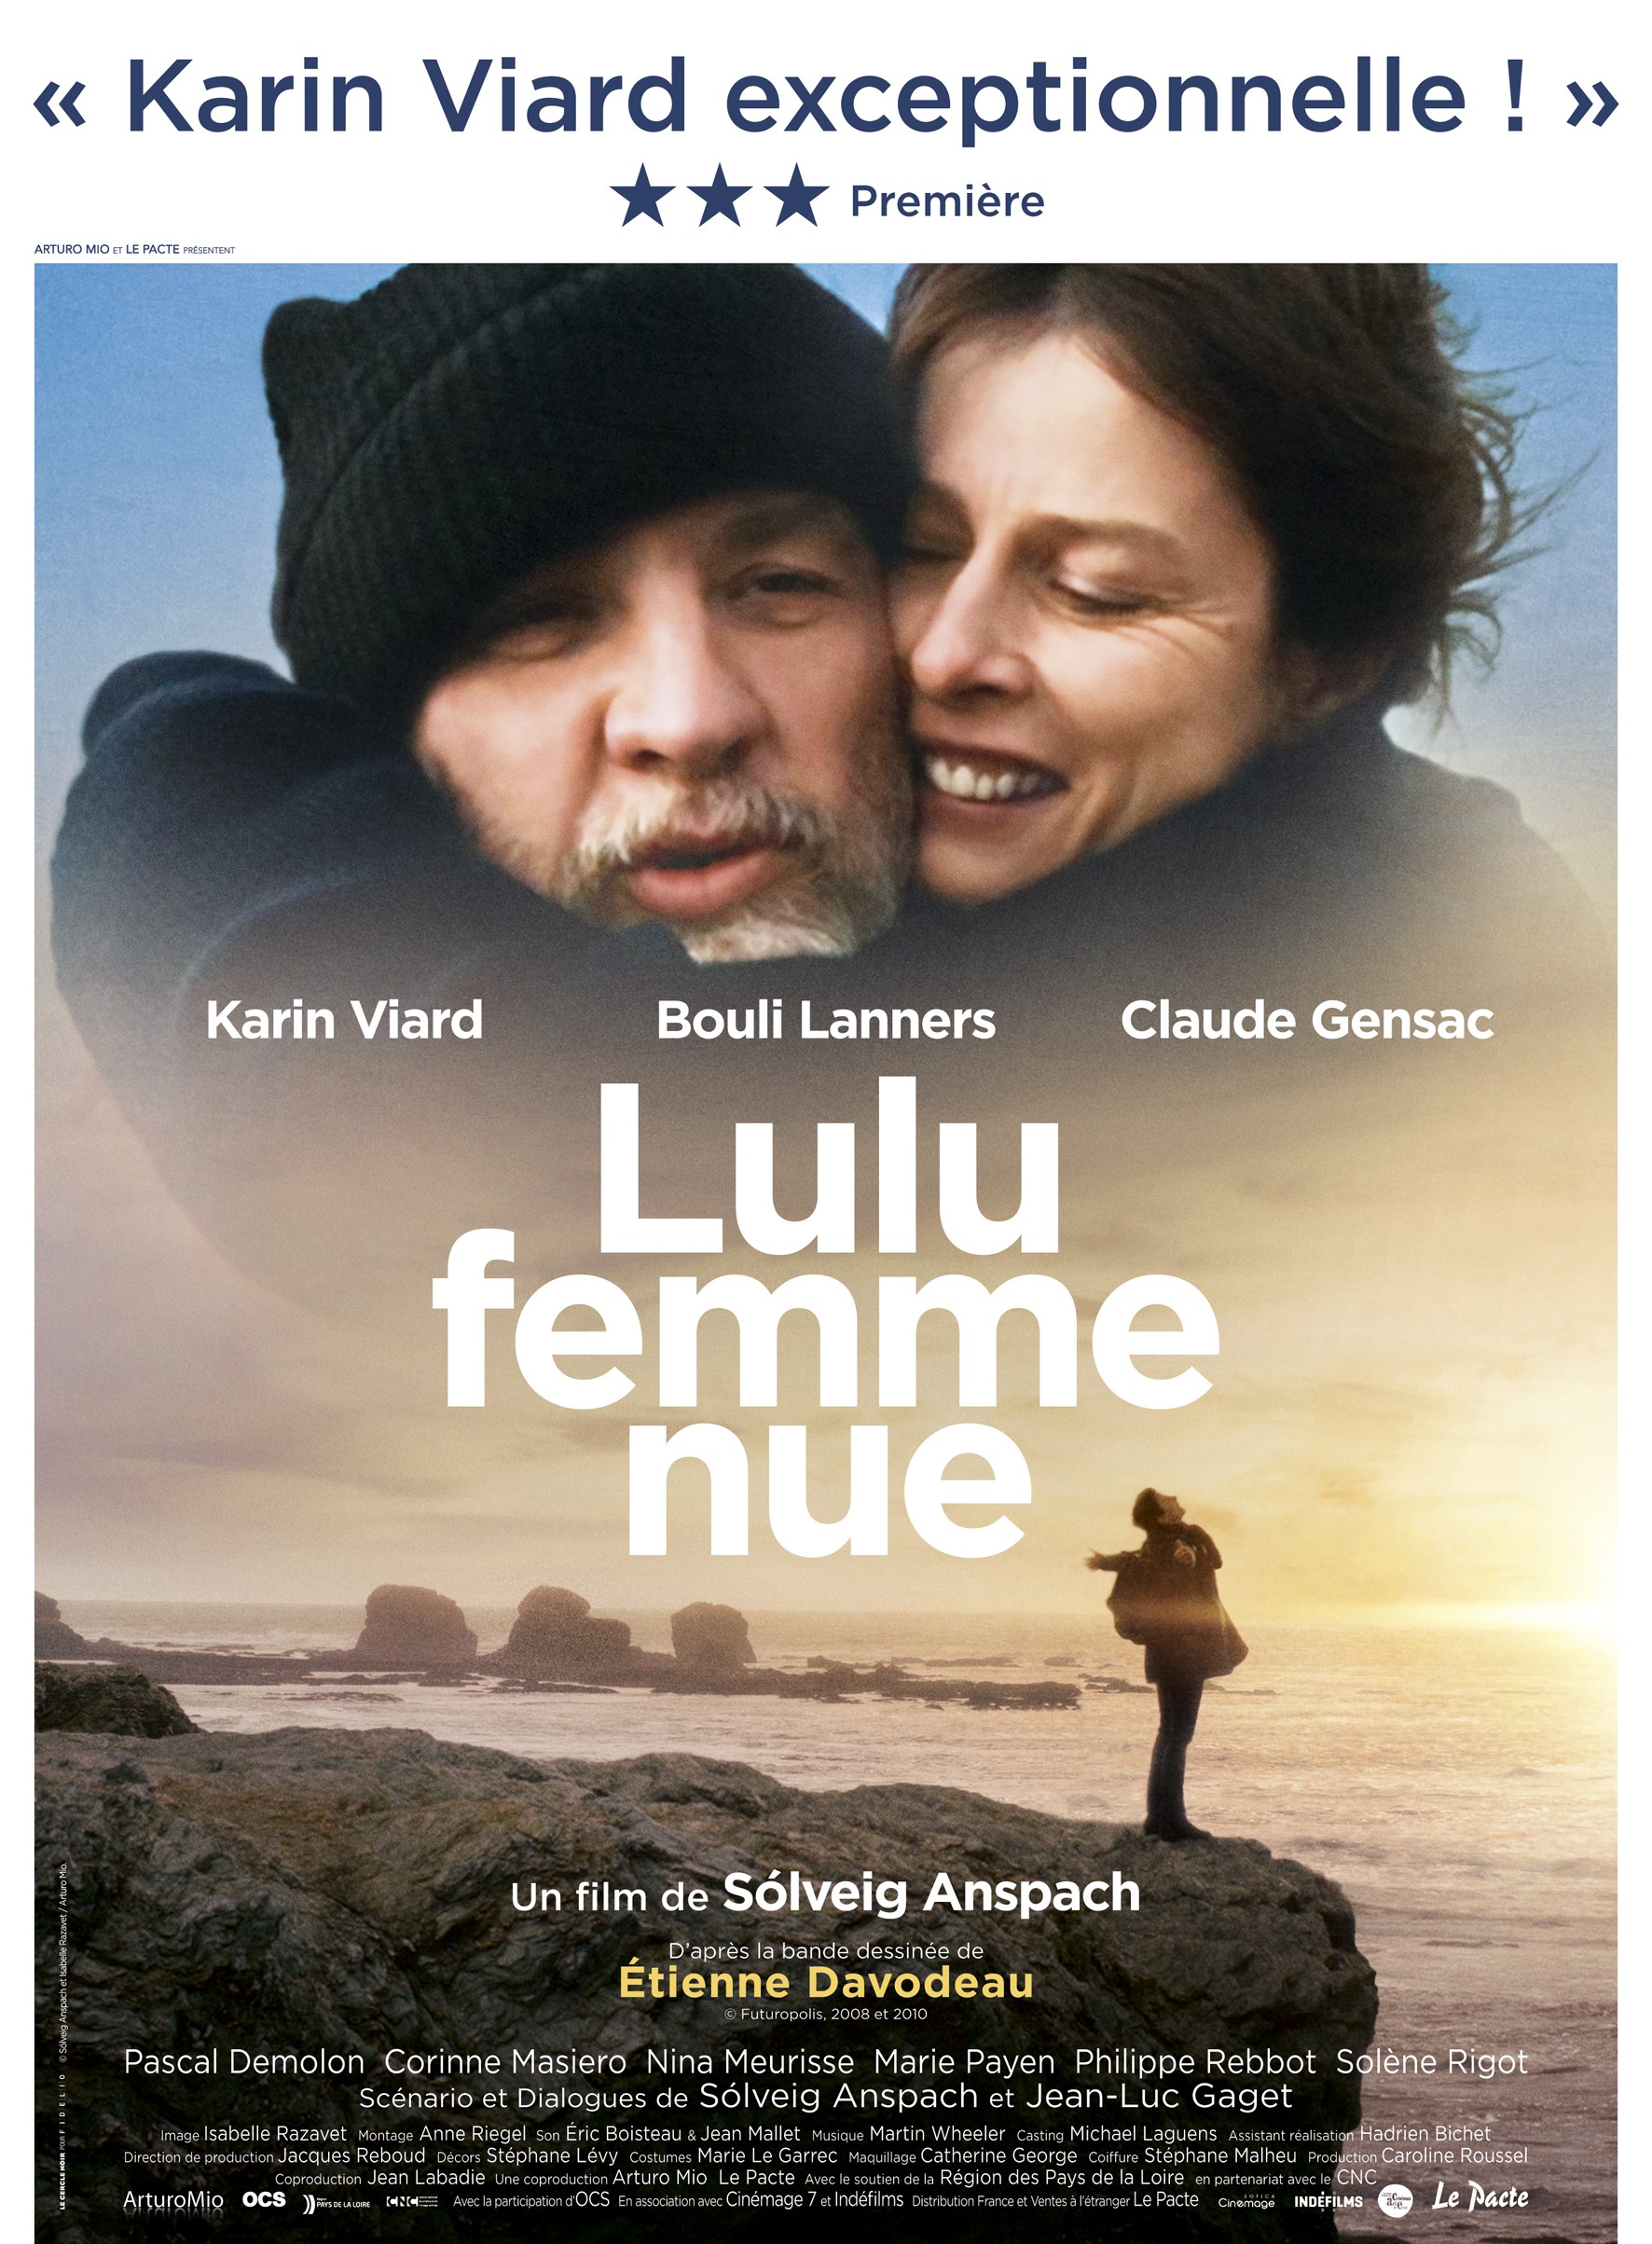 Mega Sized Movie Poster Image for Lulu femme nue 